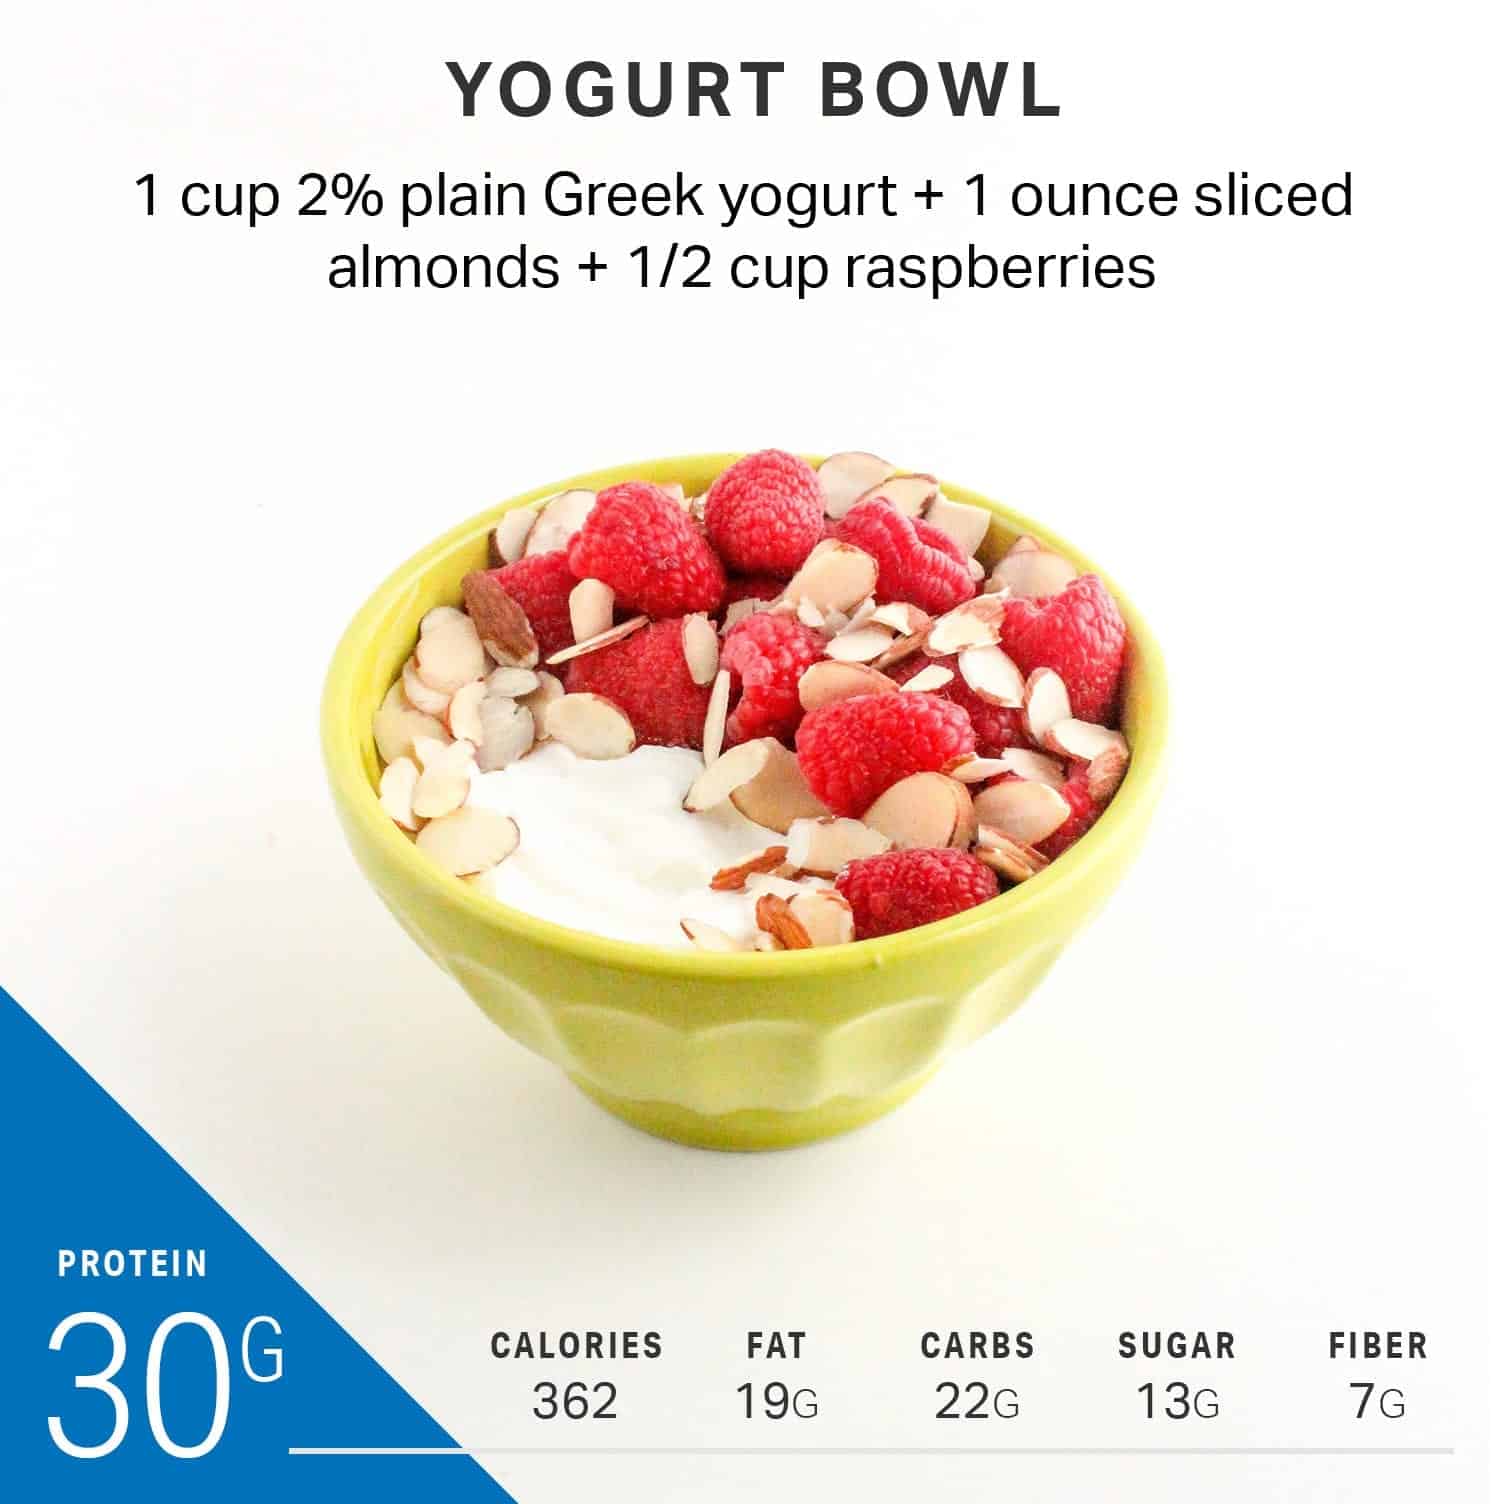 30 грамм протеина. Йогурт 30 грамм белка. Протеиновый йогурт калории. High Protein 30 грамм белка йогурт. Йогурт белорусский с 30грам.белка.